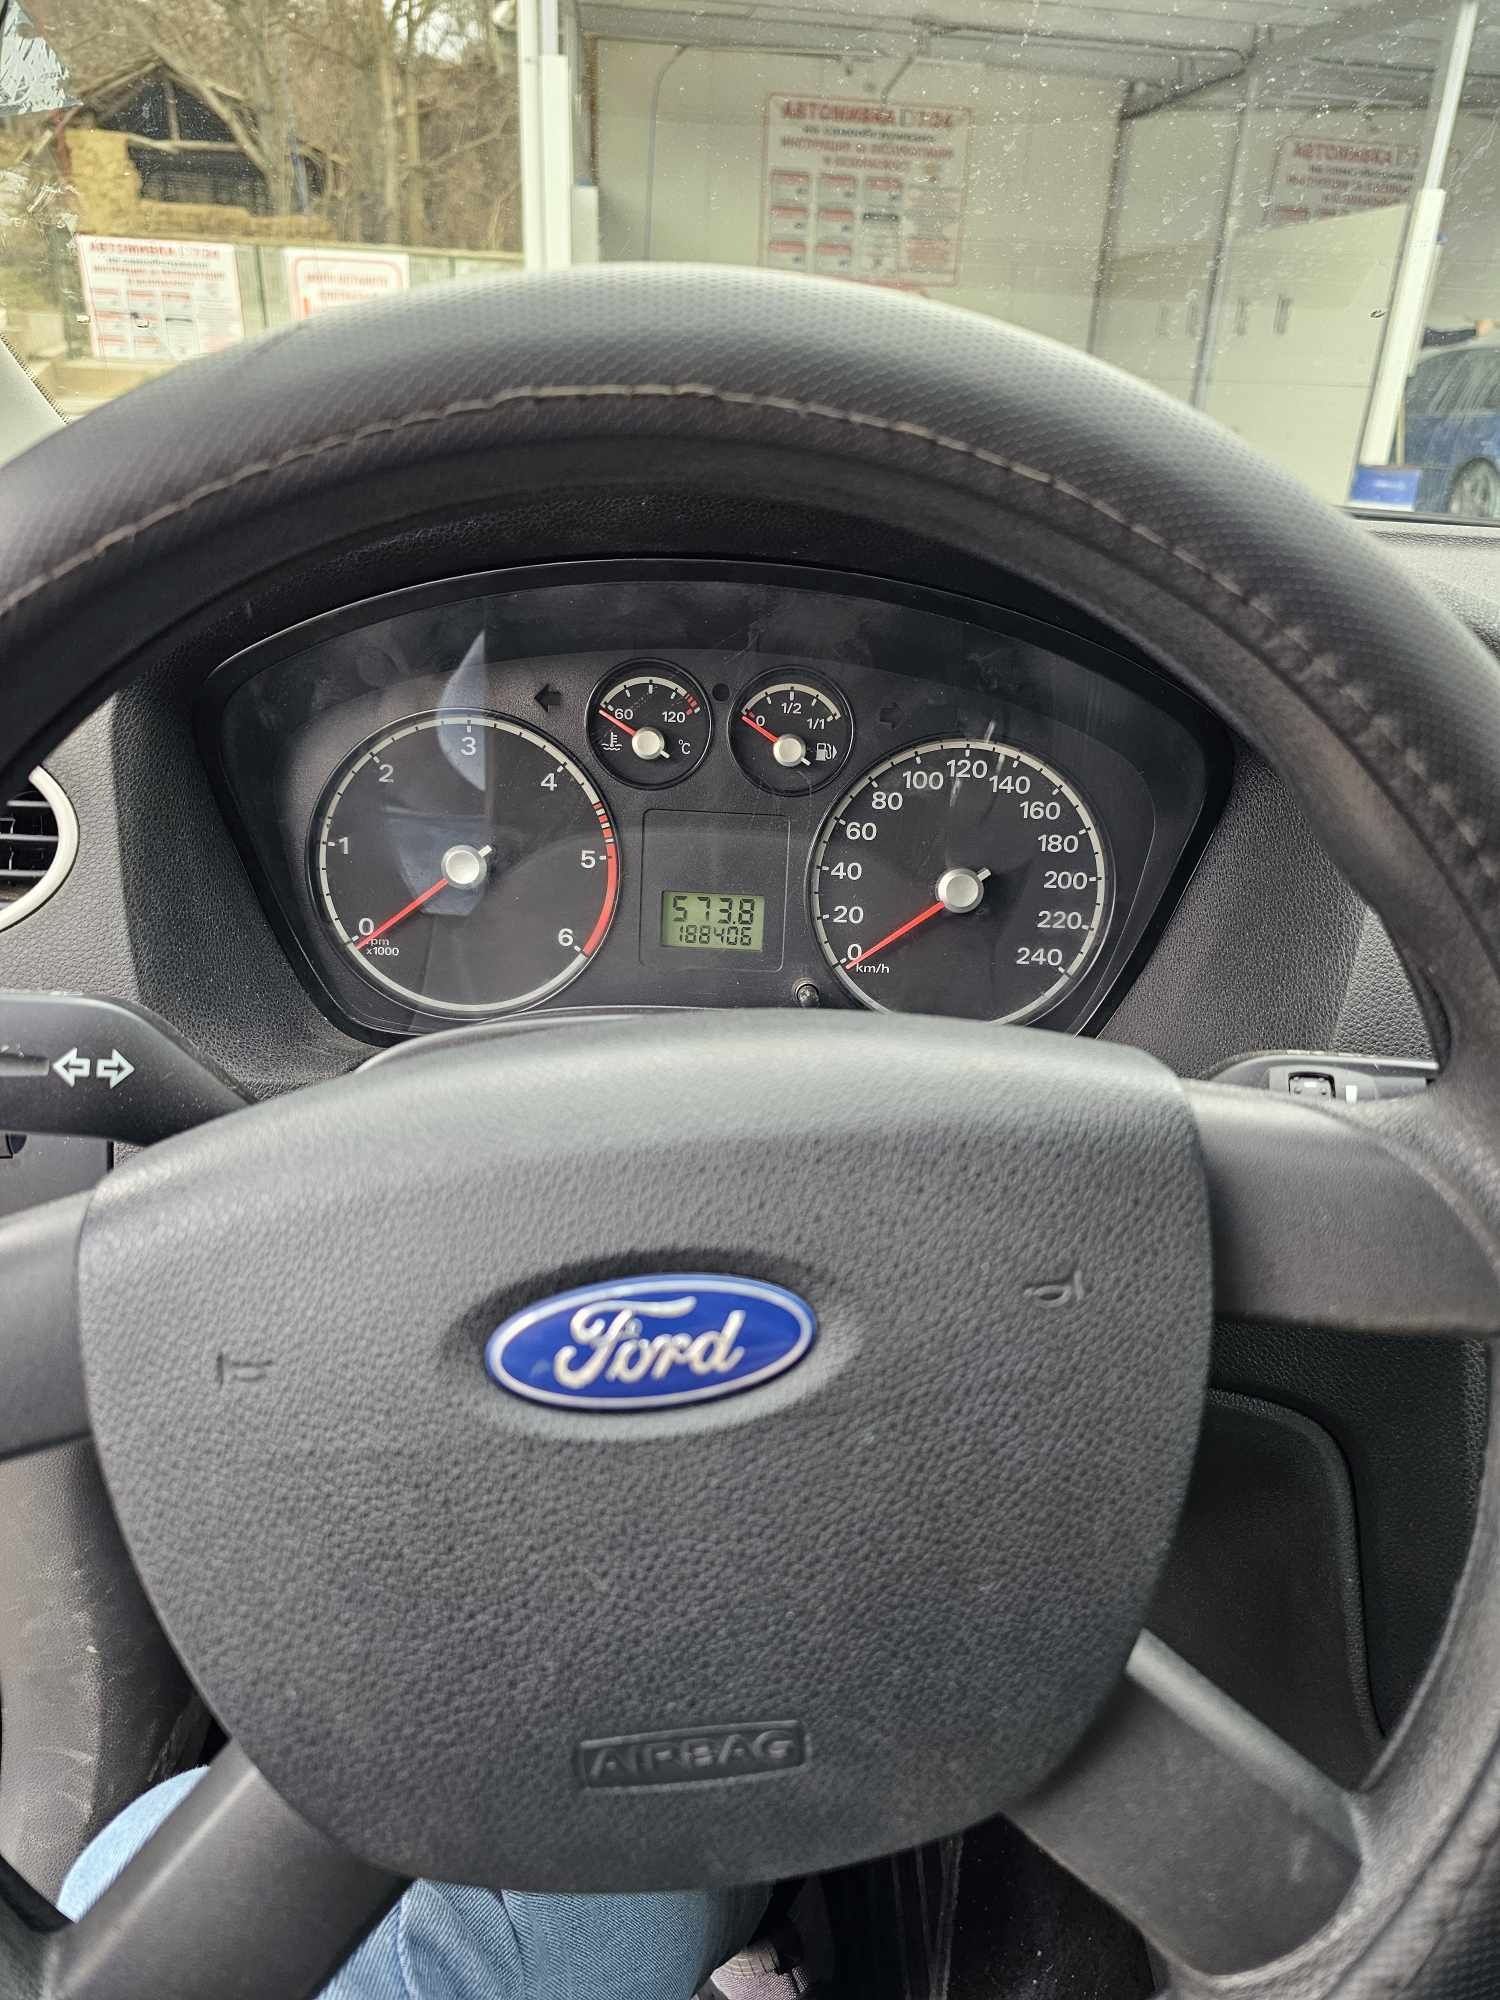 Ford Focus 1.8 tdci